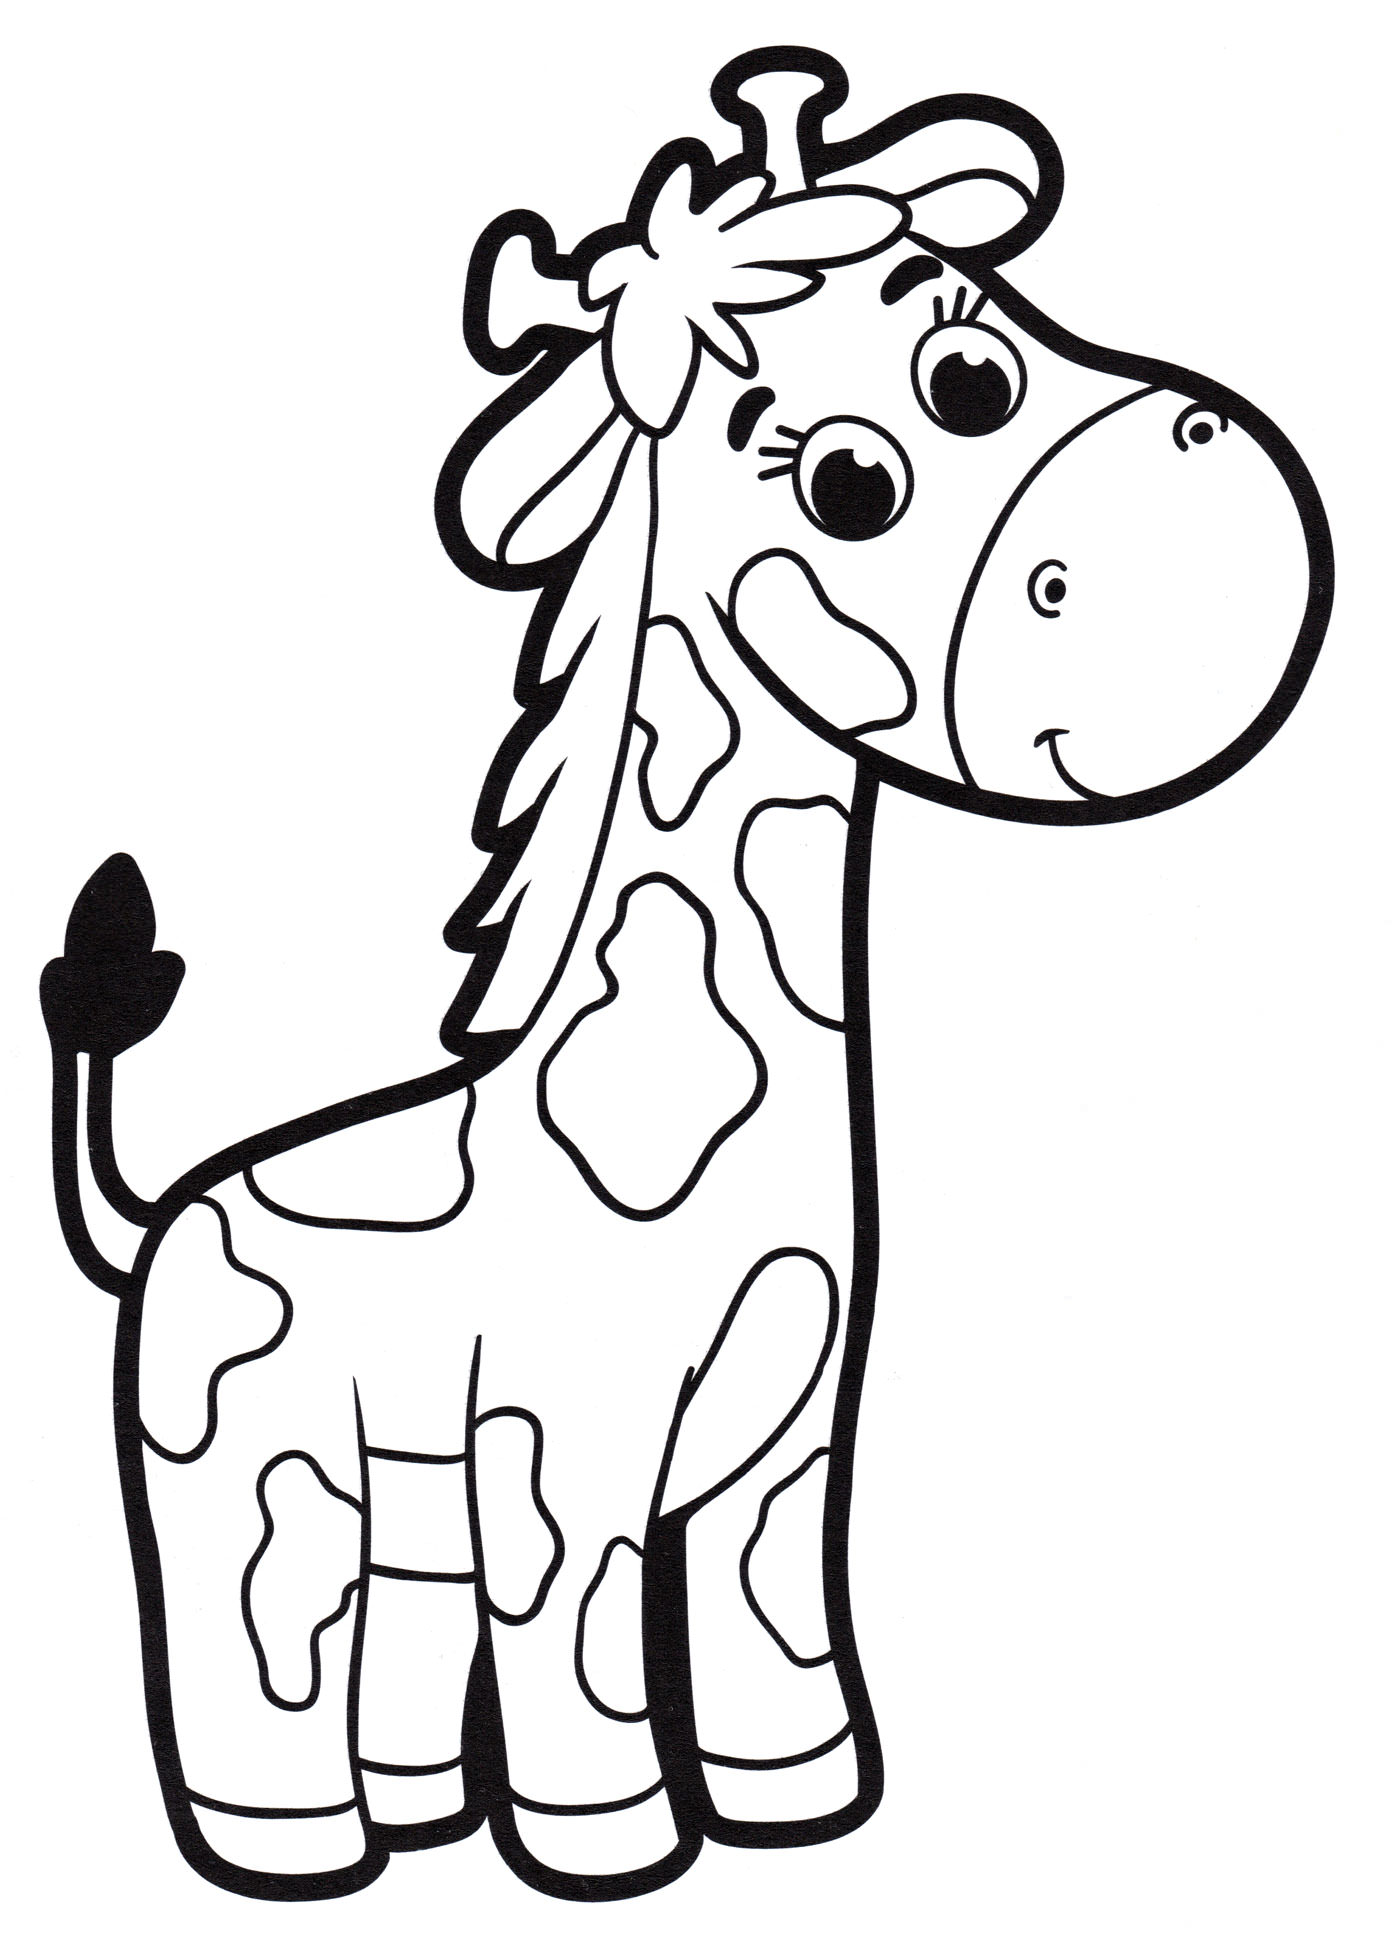 Розмальовка Малюк жирафік